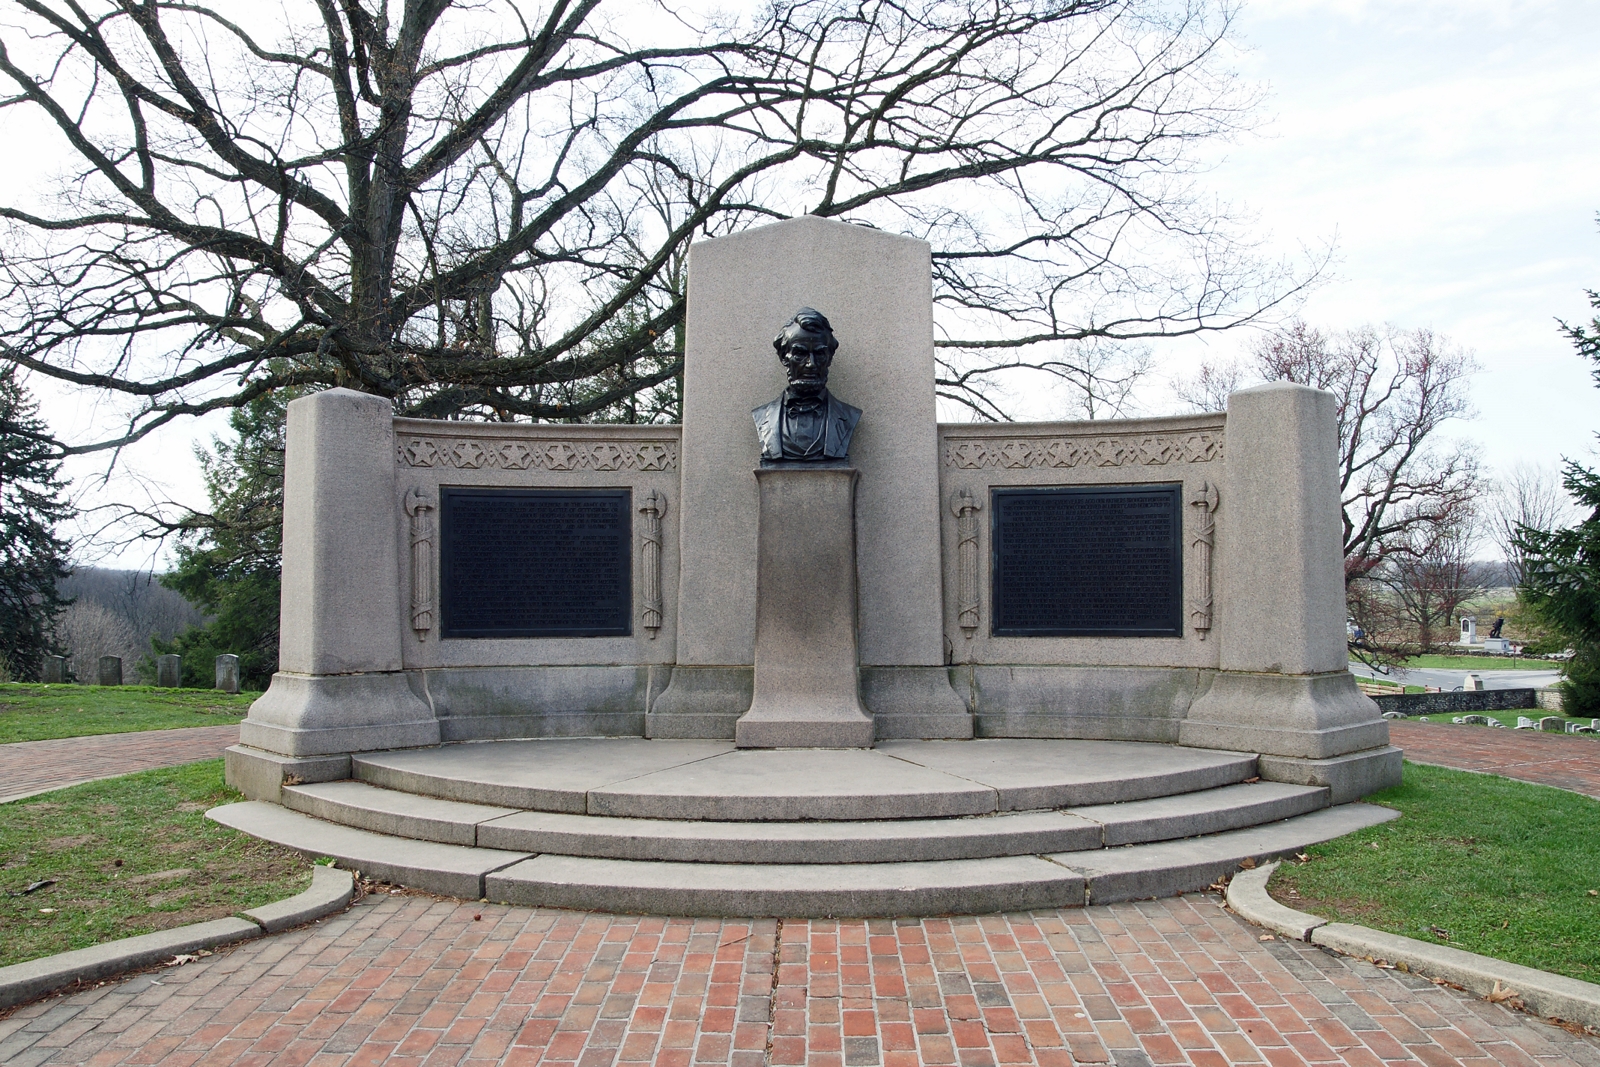 Monument recognizing Gettysburg Address